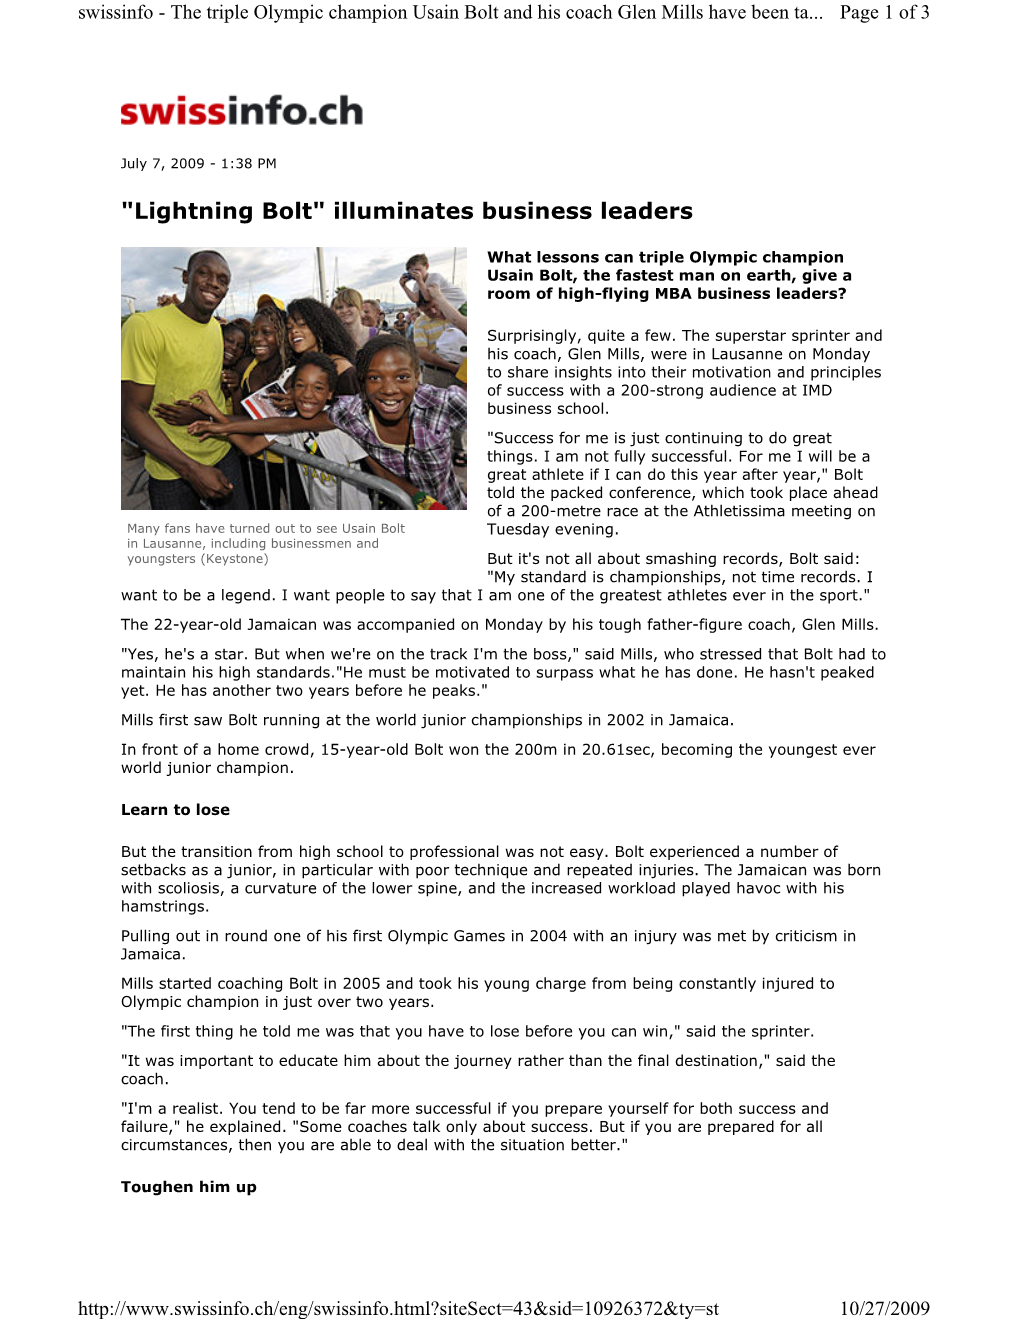 Lightning Bolt" Illuminates Business Leaders